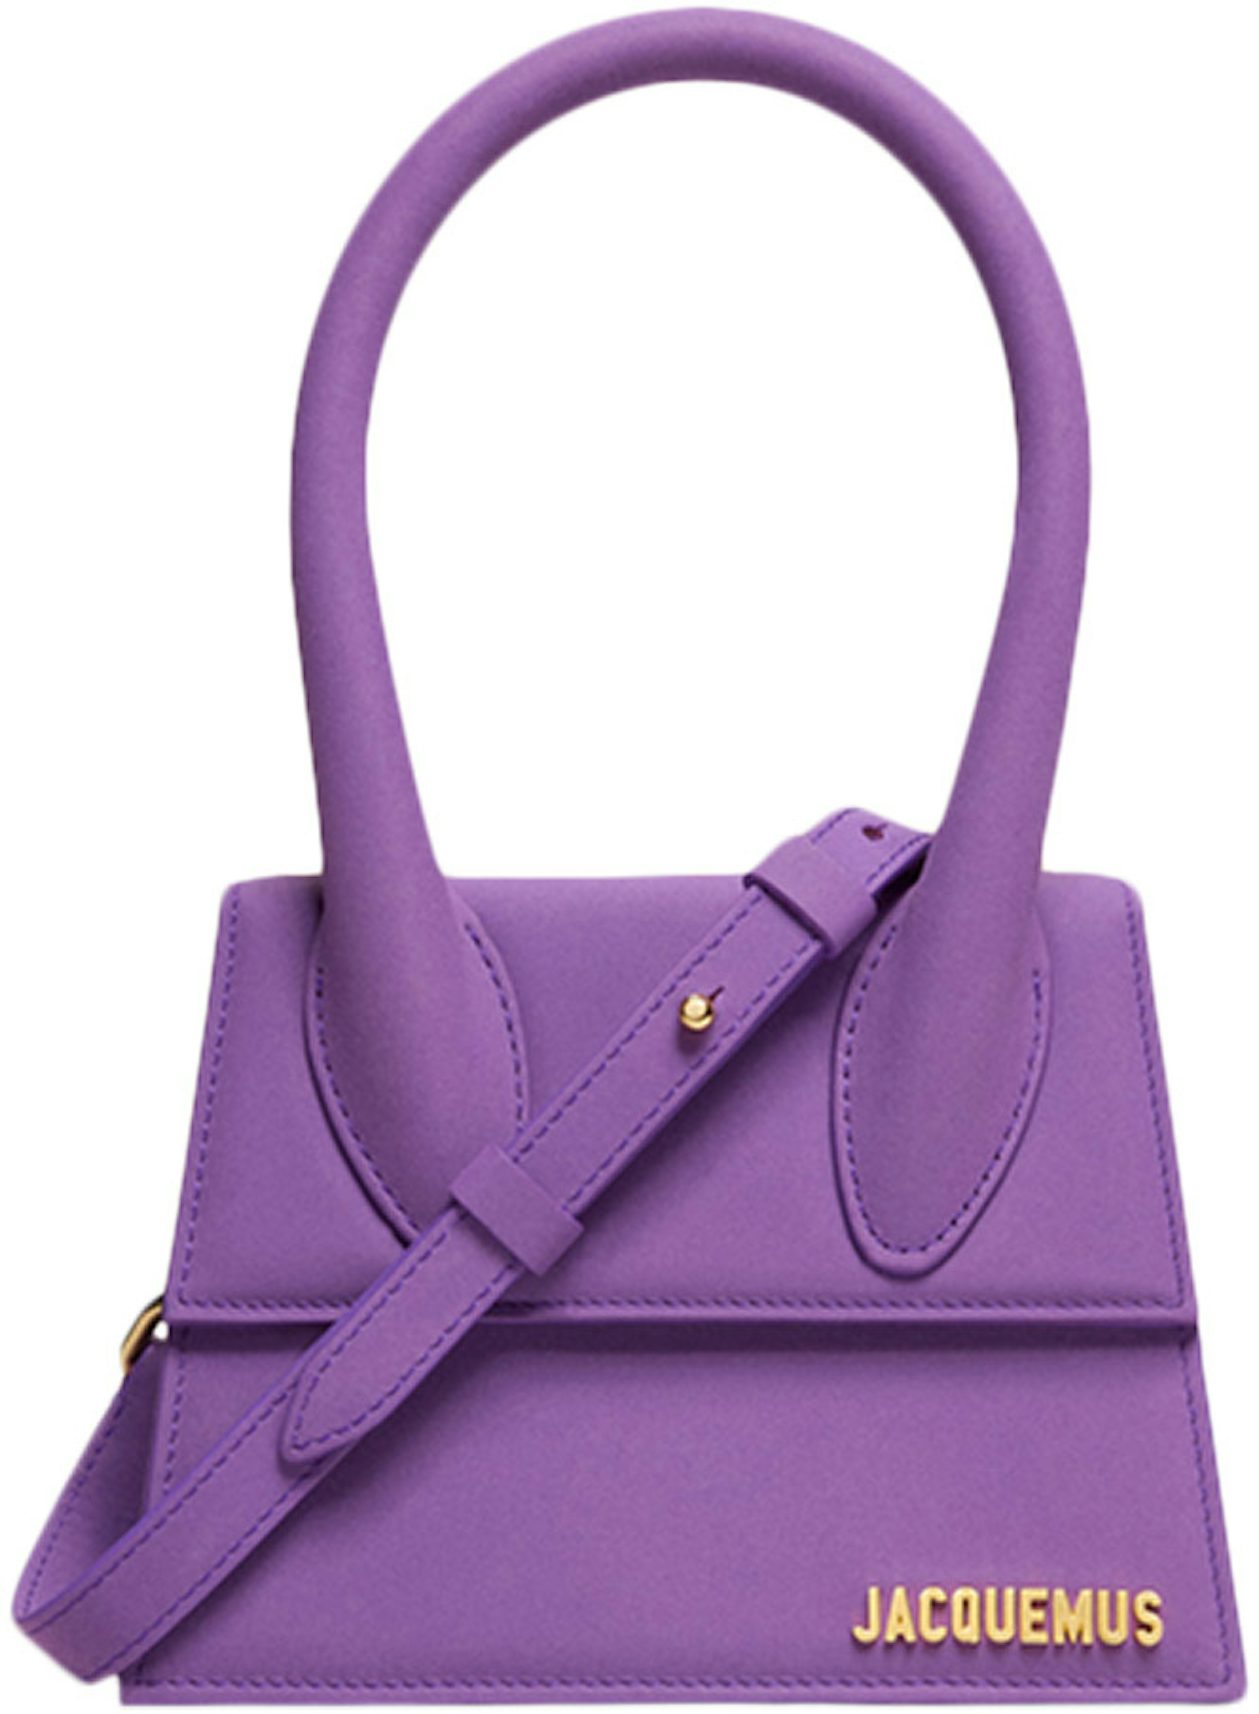 Jacquemus Le Chiquito Moyen Signature Handbag Lilac in Cowskin